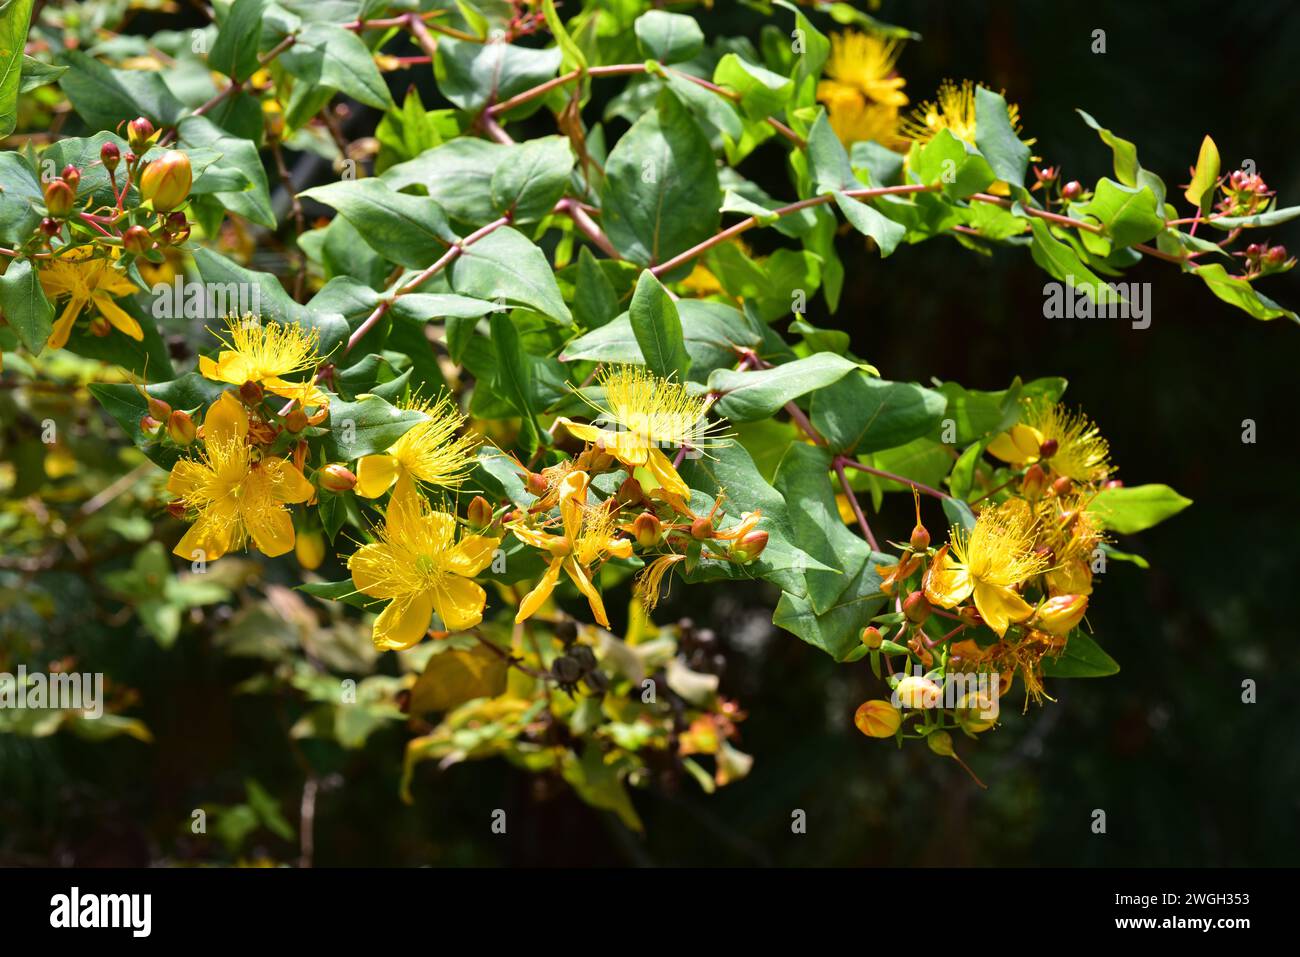 Malfurada (Hypericum grandifolium) is an evergreen shrub endemic to Canary Islands and Madeira. Flowers detail. Stock Photo